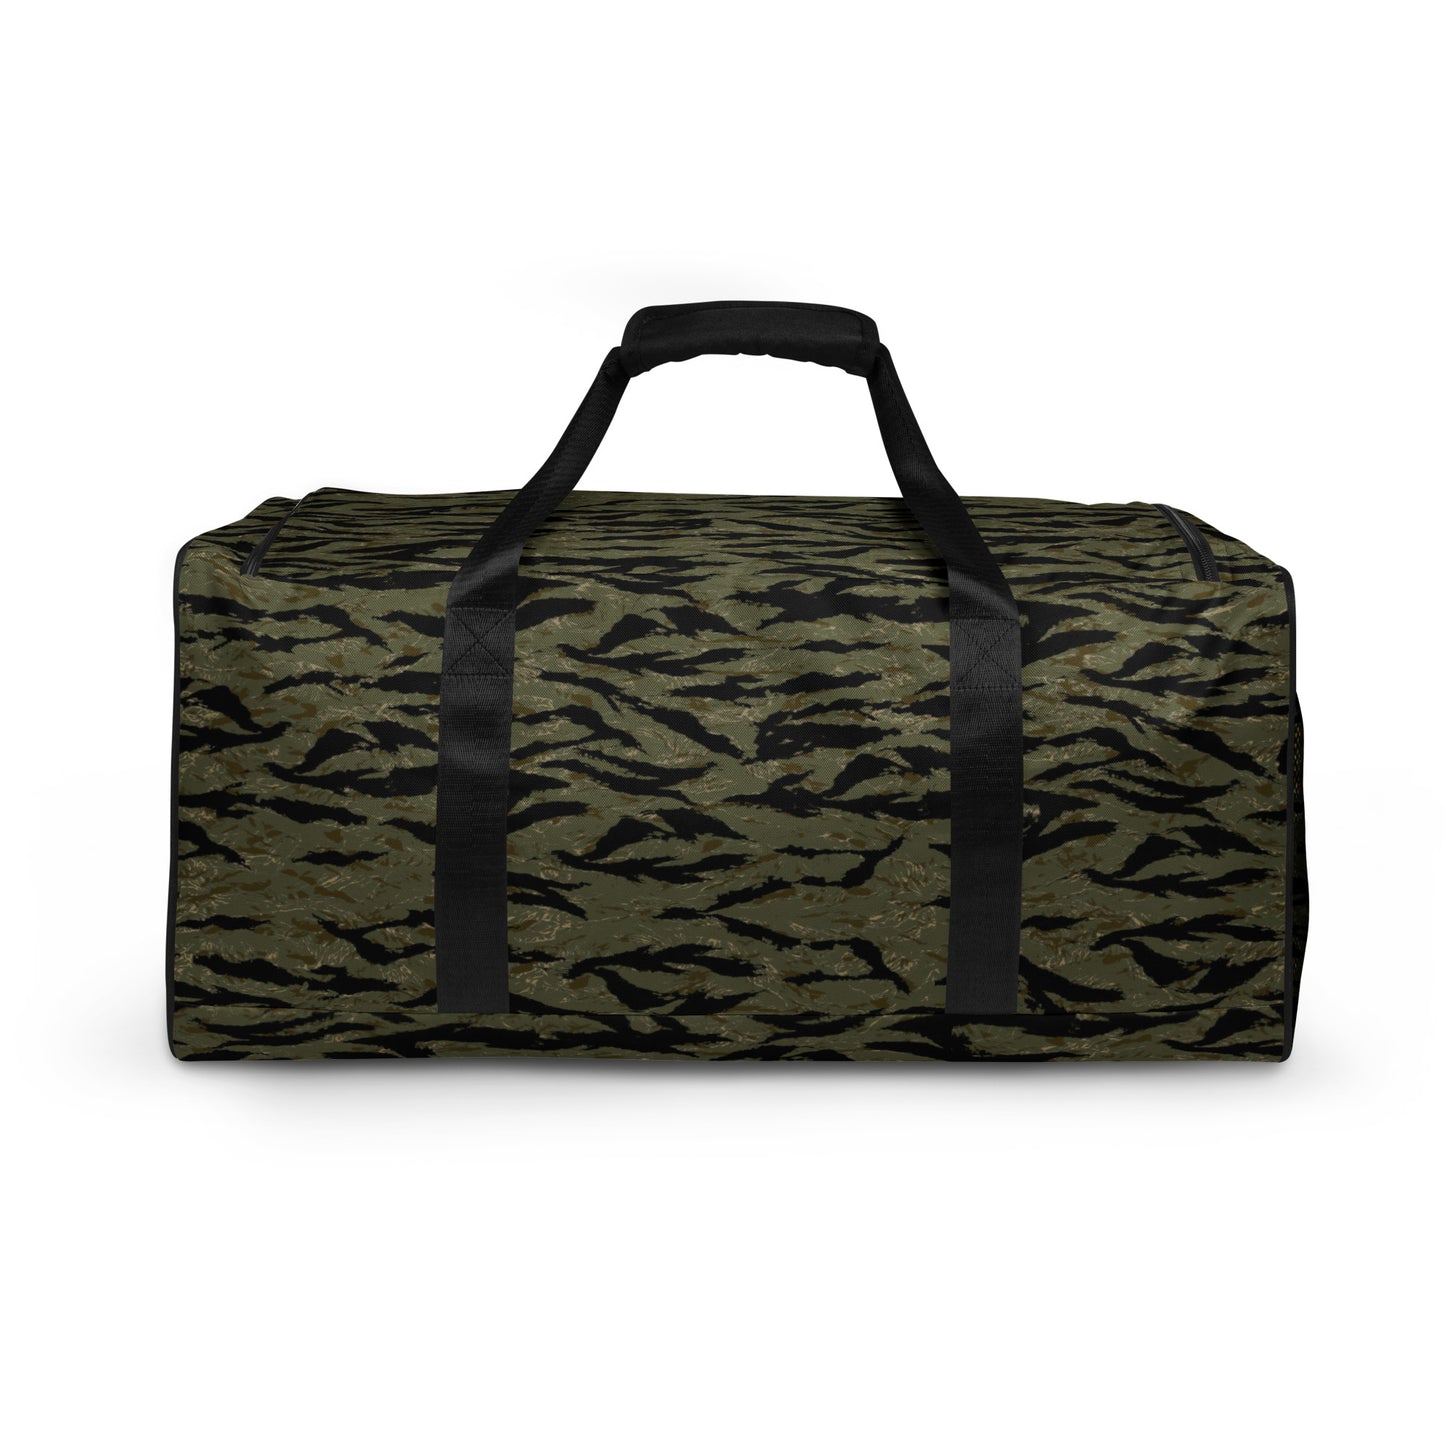 Tiger Stripe Camo Duffle bag